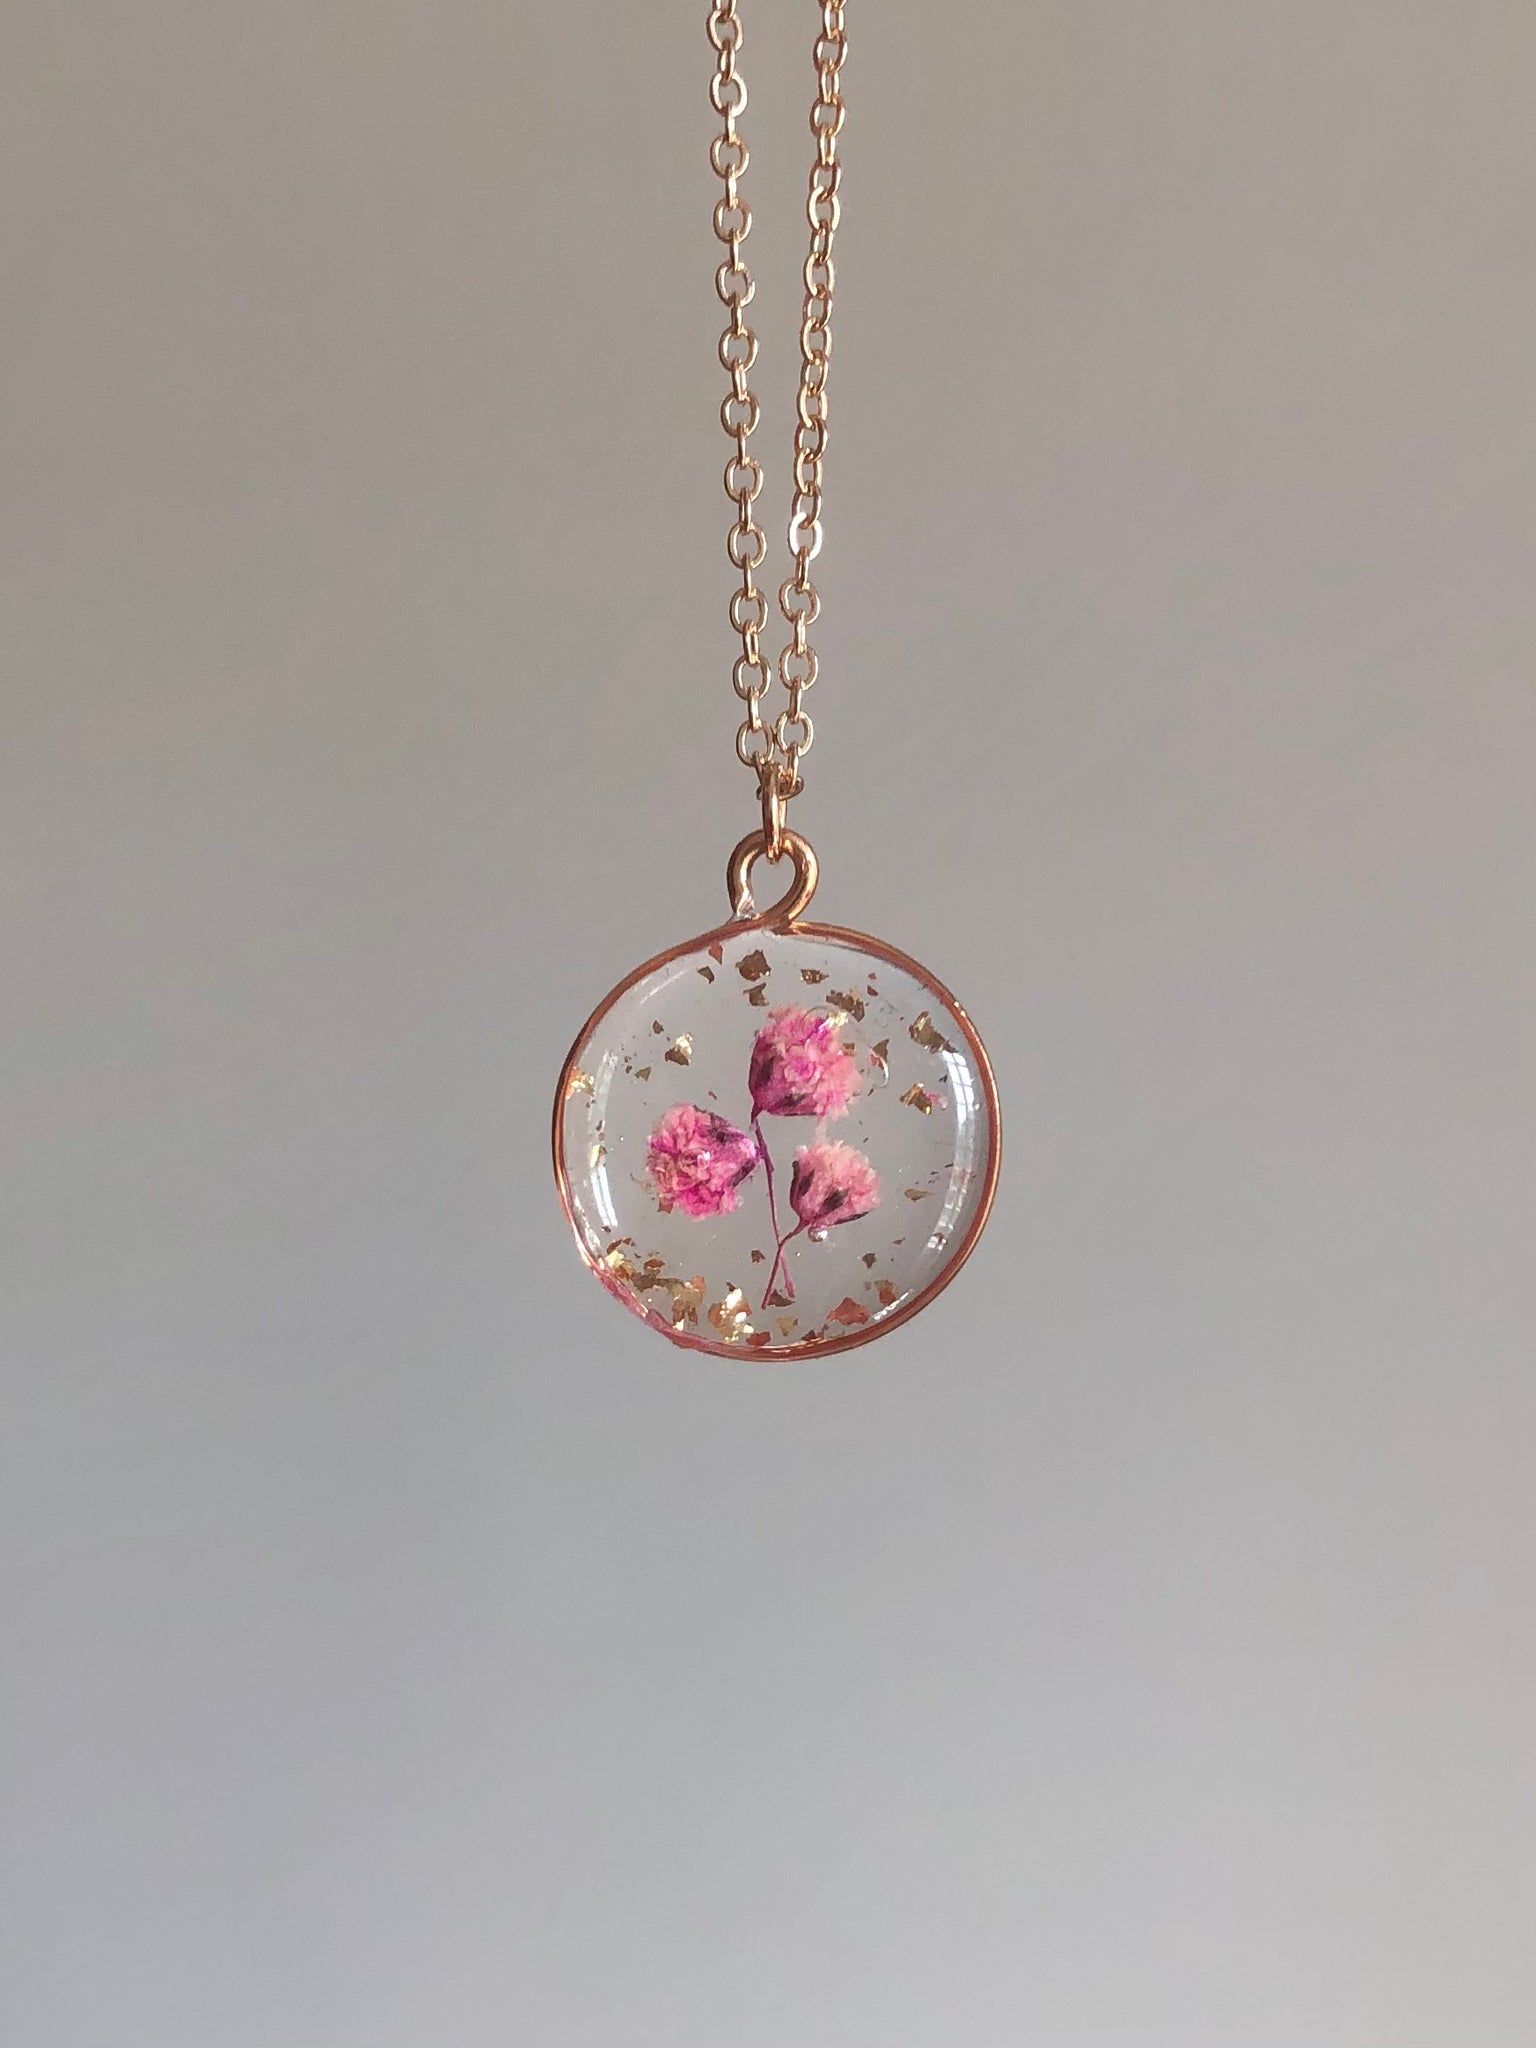 Pink Rhea Pendant Necklace